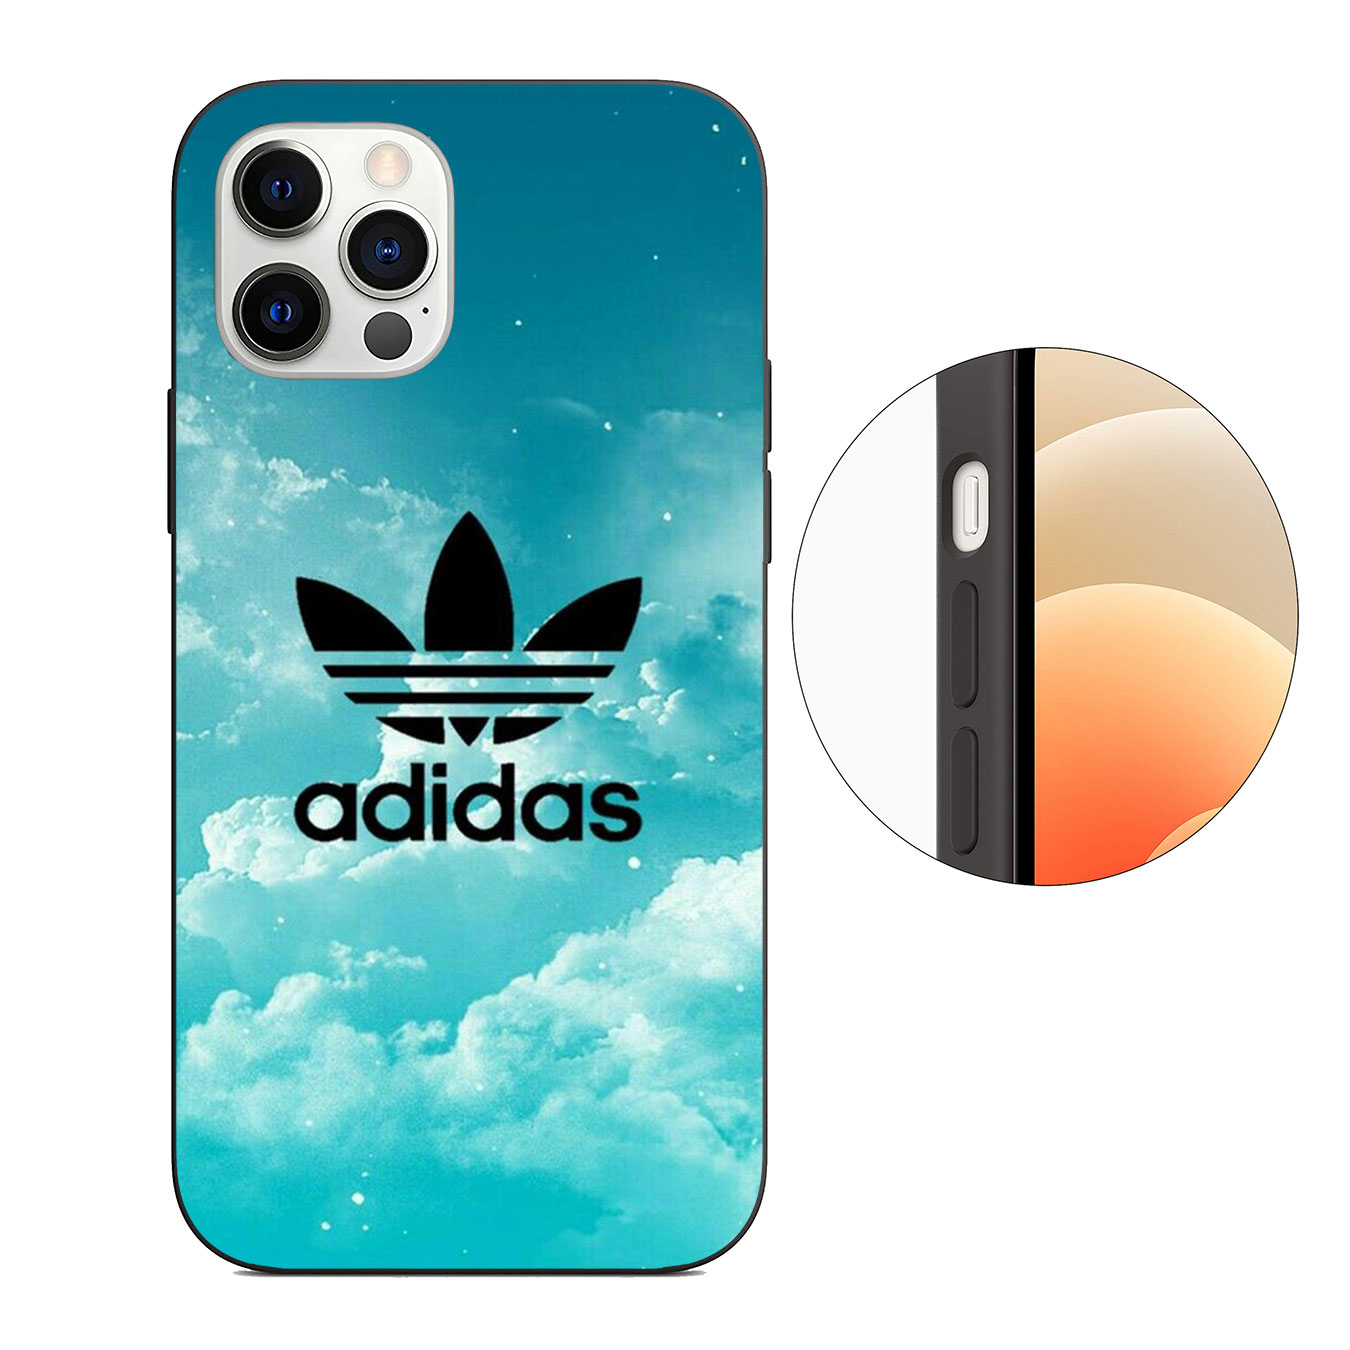 Ốp điện thoại silicon mềm in logo Adidas B5 cho Samsung Galaxy A9 A8 A7 A6 Plus J8 2018 + A21S A70 M20 A6+ A8+ 6Plus